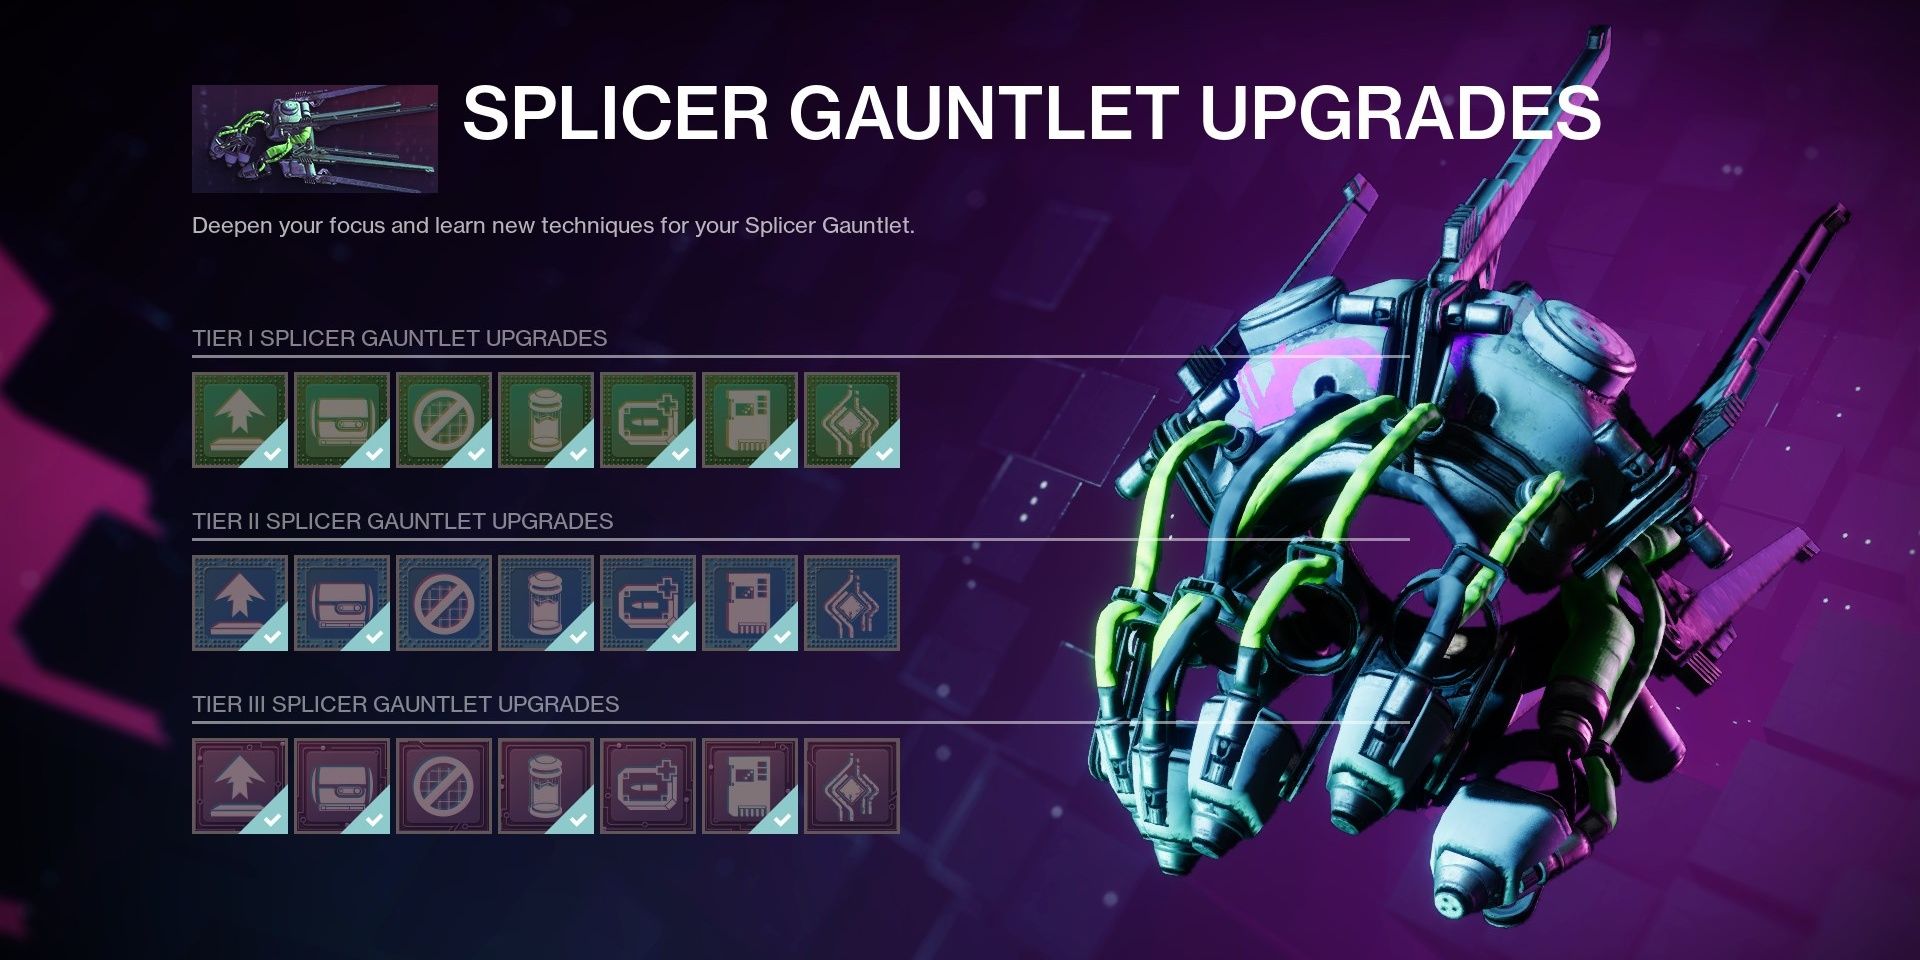 Destiny 2 Splicer Gauntlet Upgrades